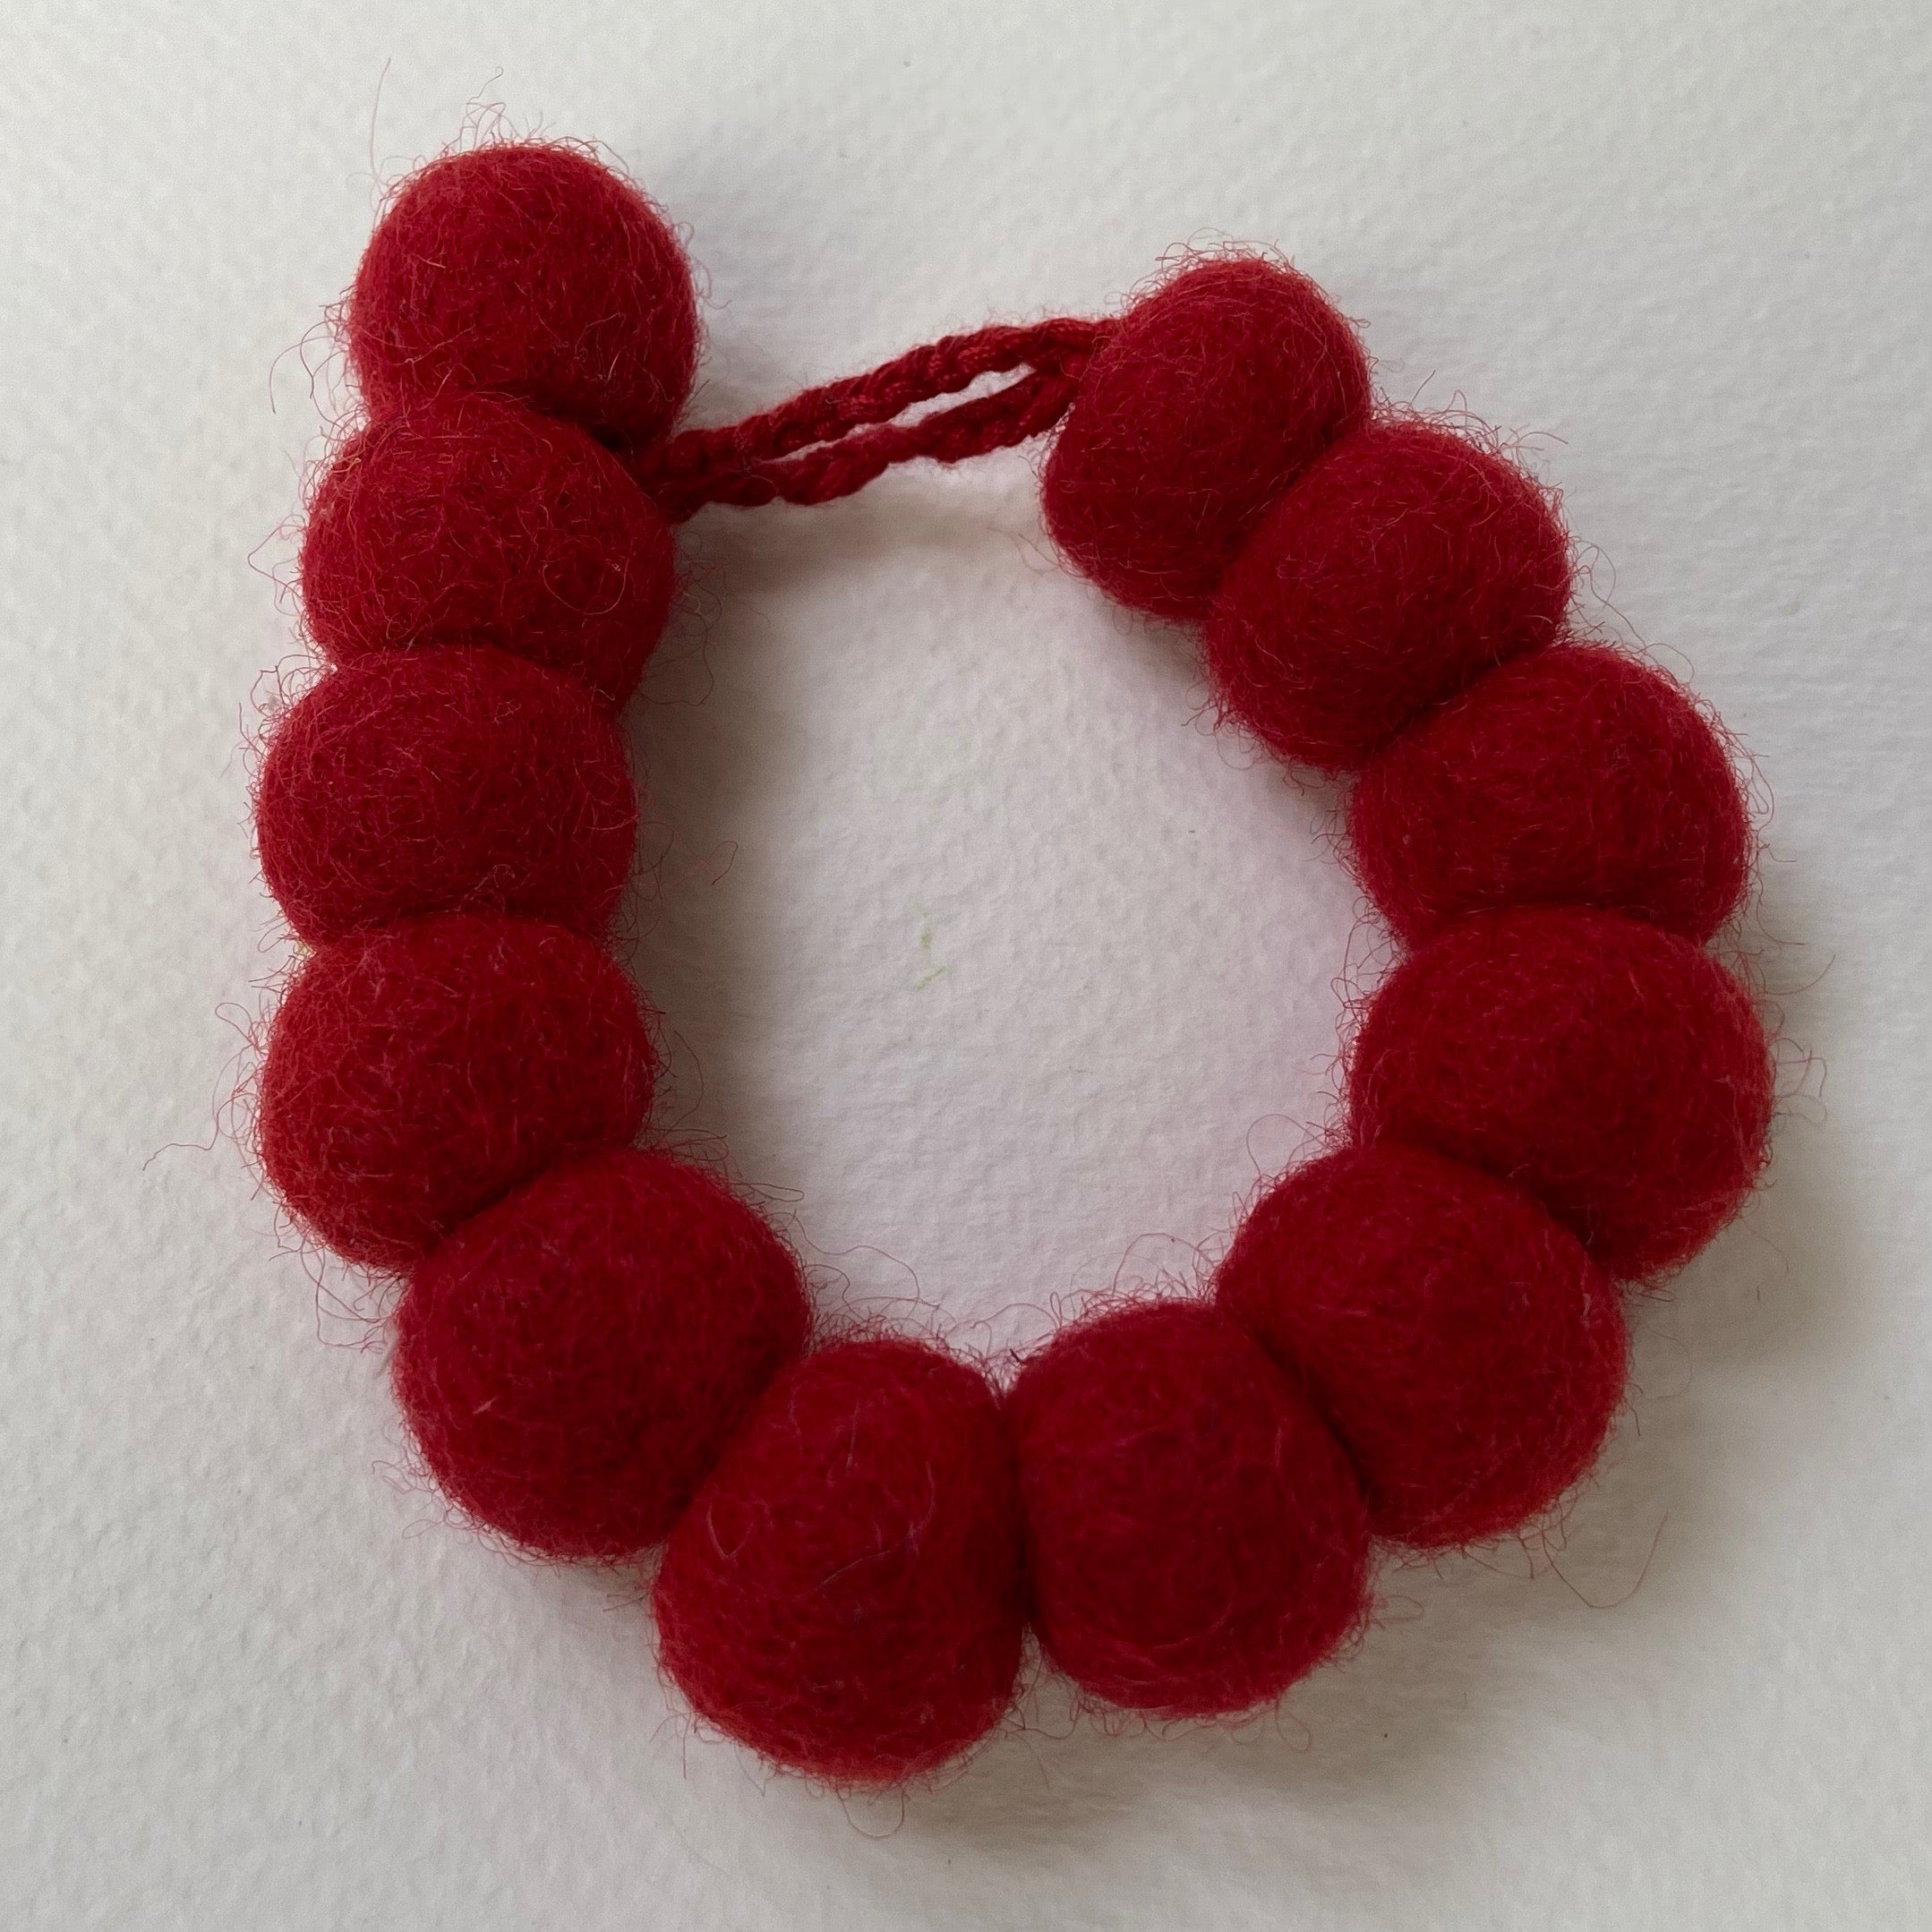 Bracelet of Red Felt Balls - The Nancy Smillie Shop - Art, Jewellery & Designer Gifts Glasgow